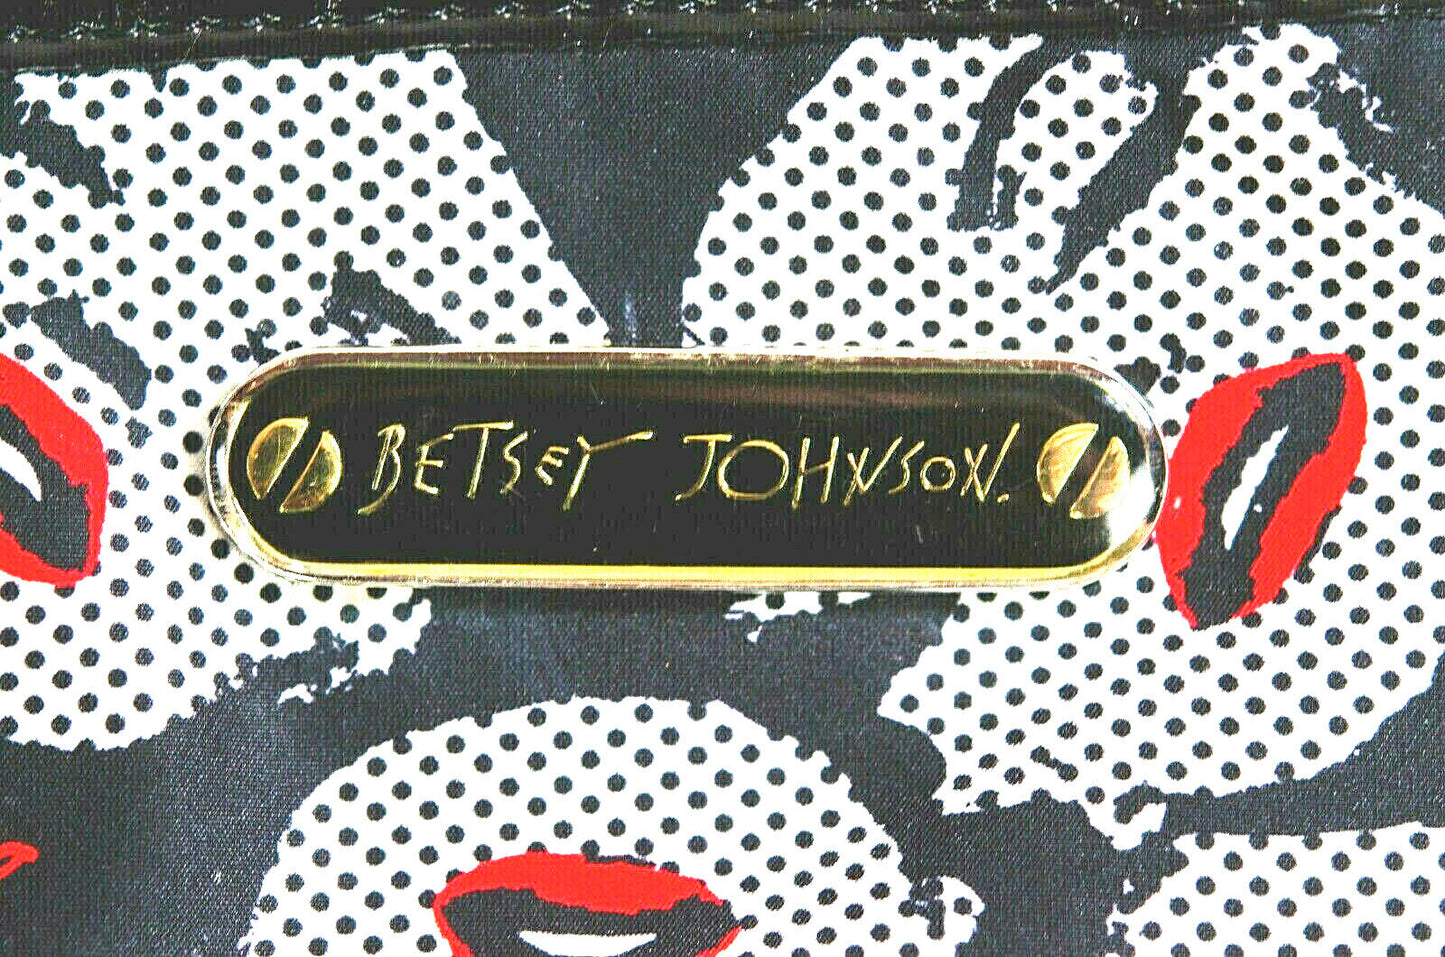 Betsey Johnson Marilyn Monroe "Pop Lips" by Andy Warhol Makeup Cosmetic Bag